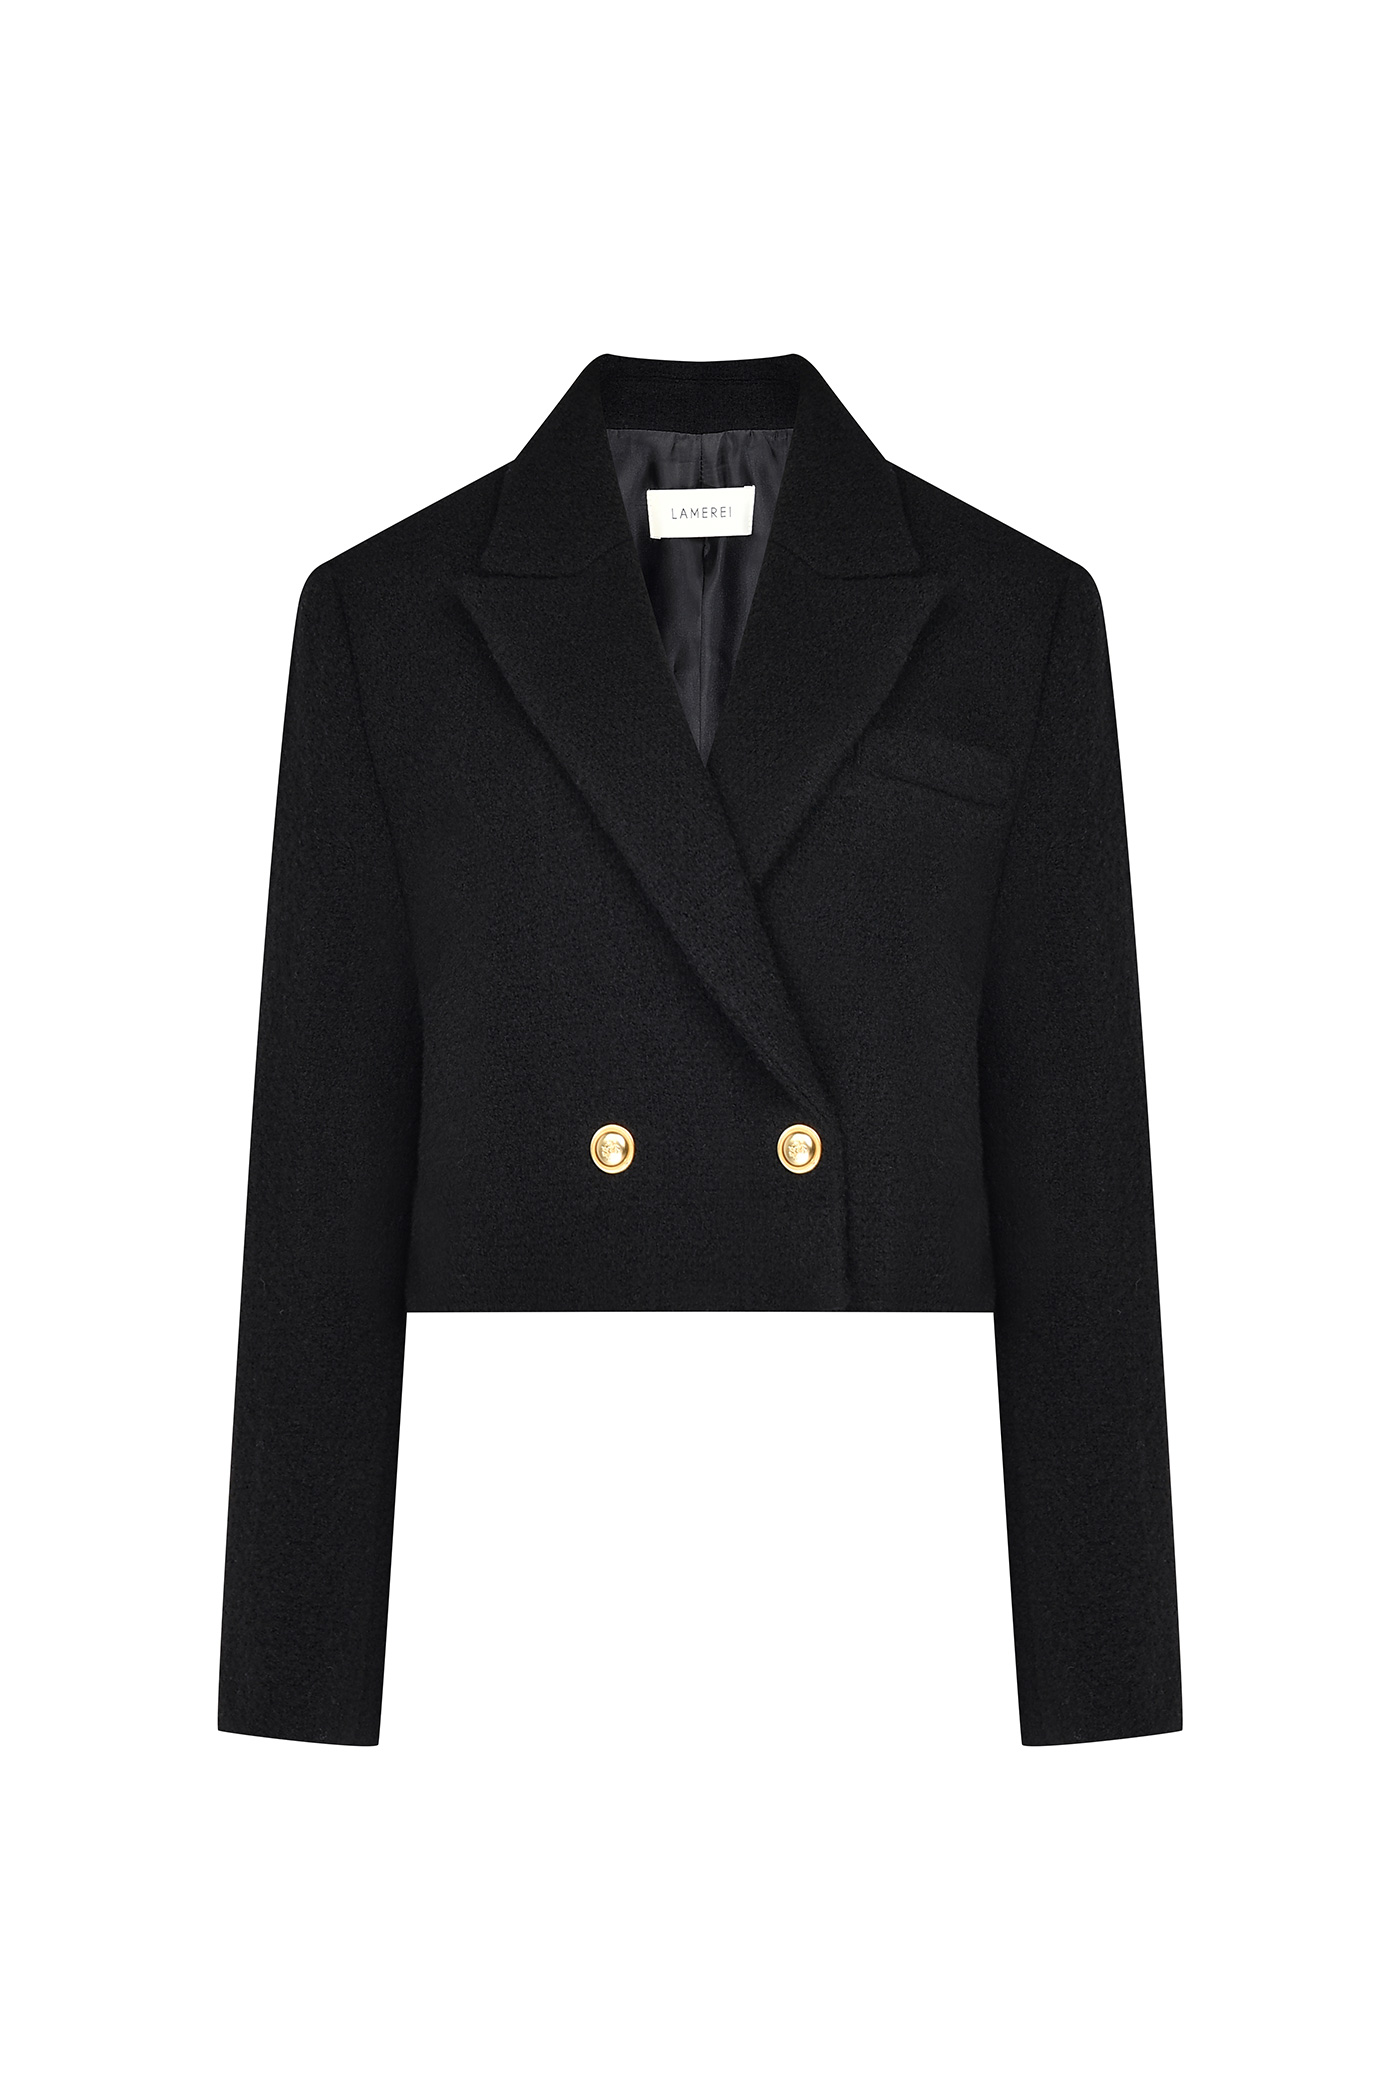 [SAMPLE]Wool Crop Collar Jacket[LMBBWIJK201]-Black